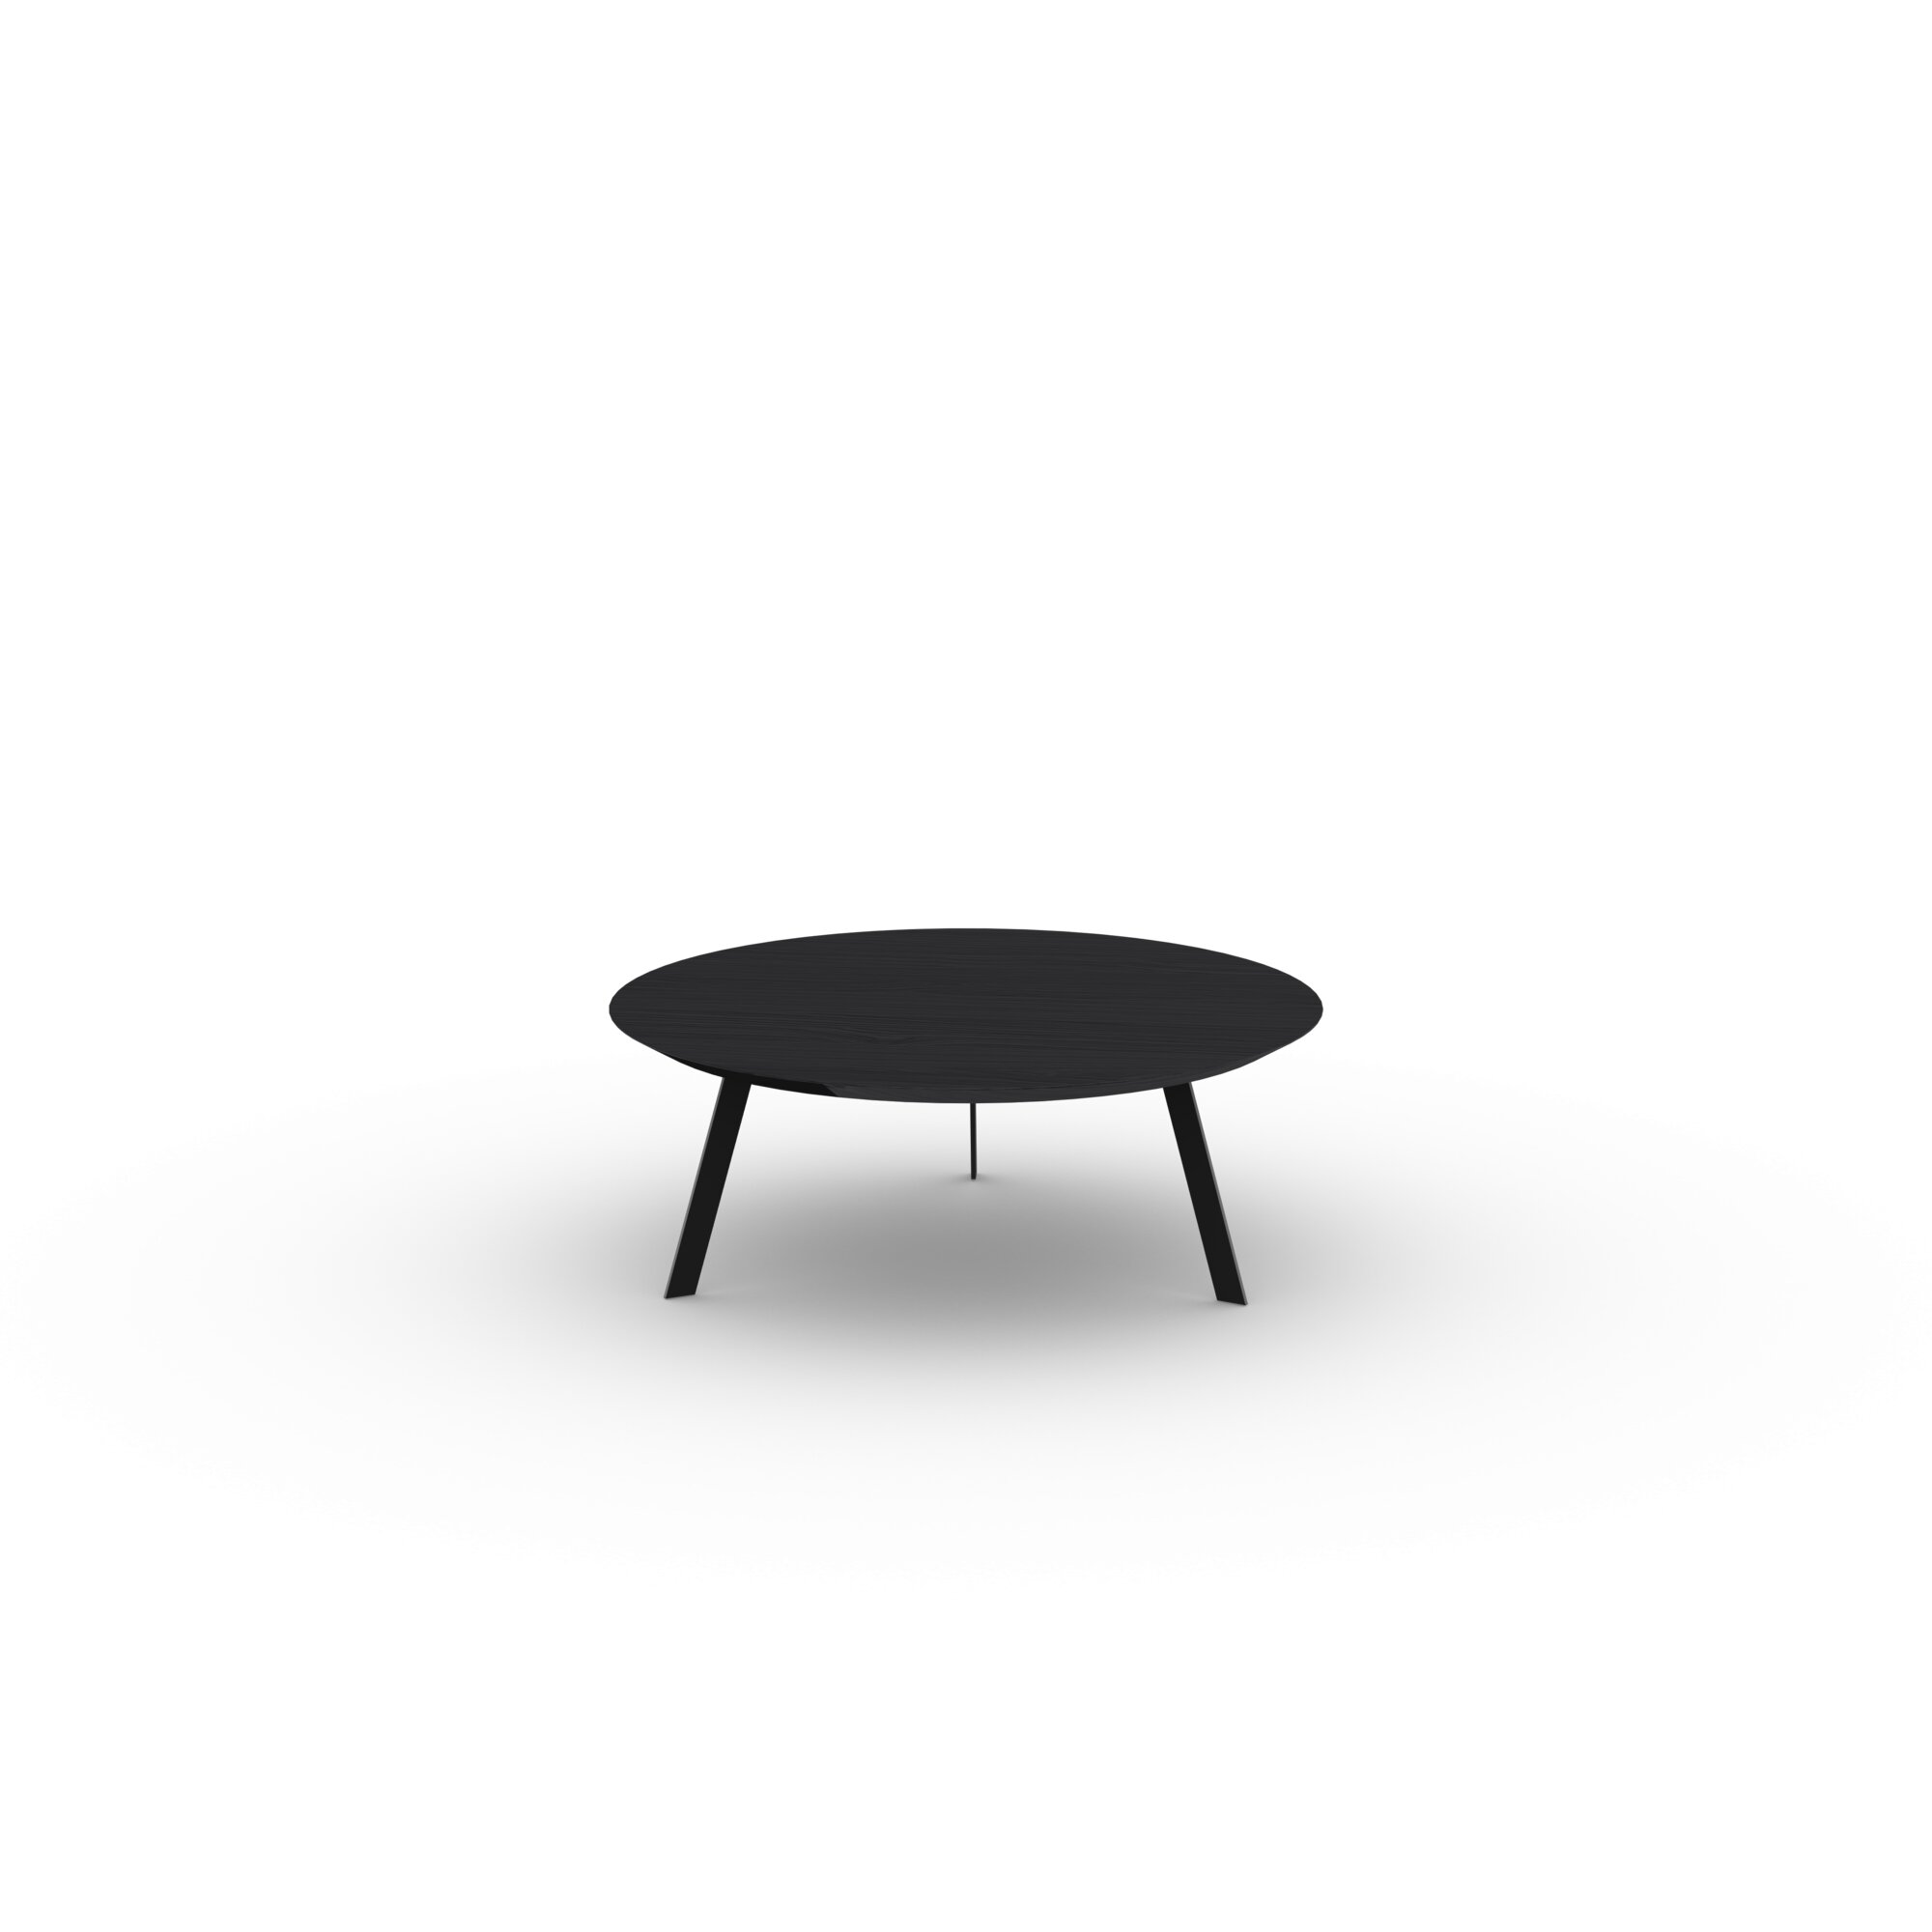 Design Coffee Table | New Co Coffee Table 90 Round Black | Oak black lacquer | Studio HENK| 